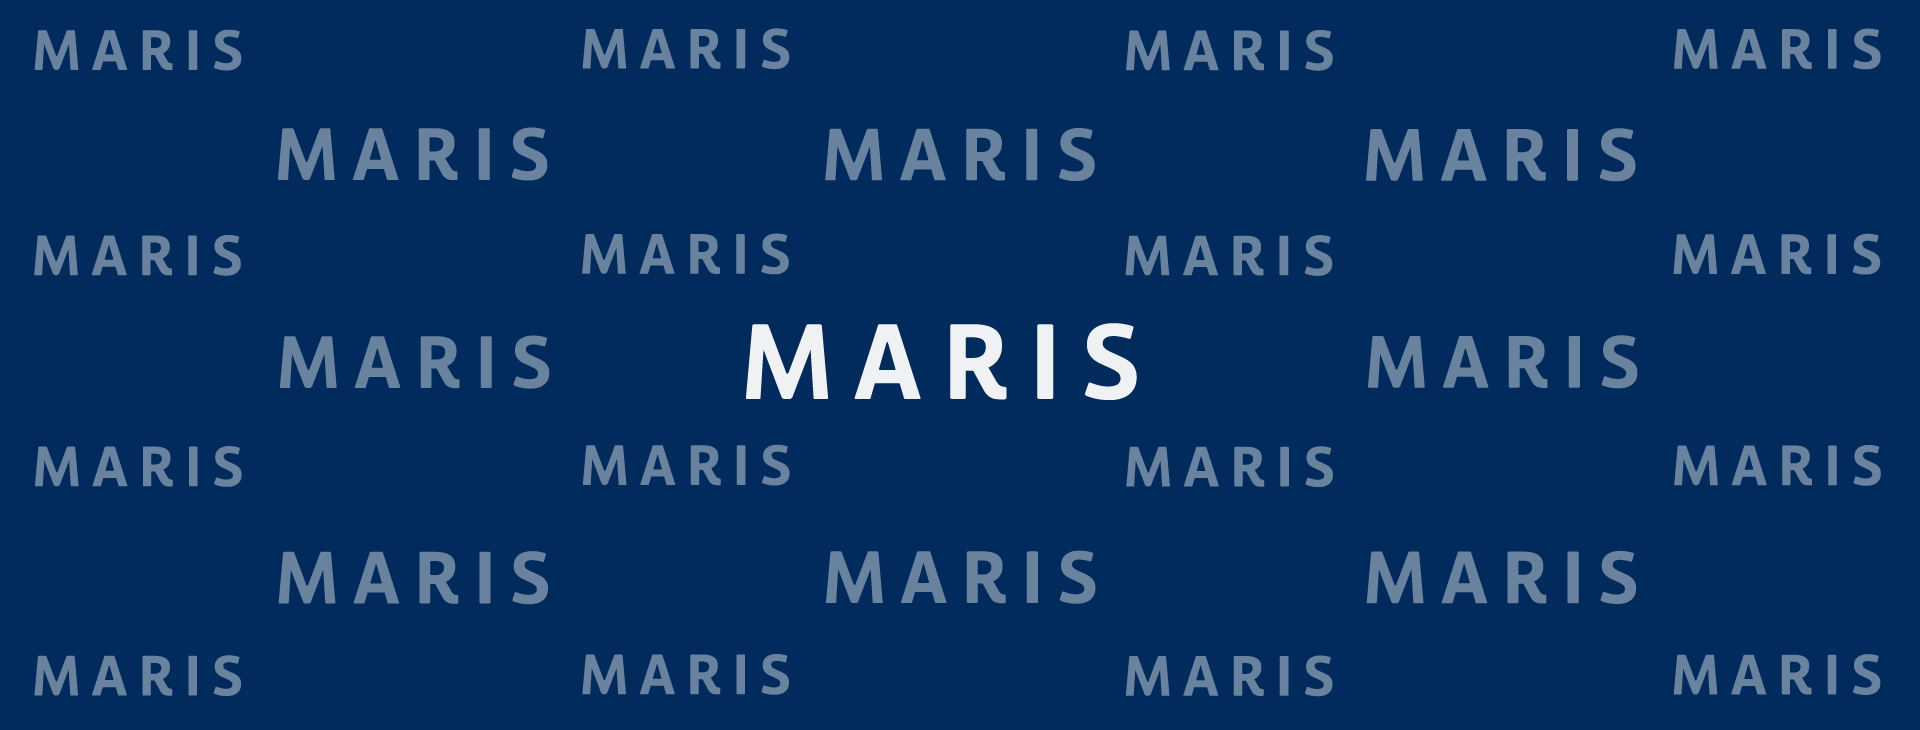 Image for PR: MARIS Separates Shareholder Ownership From Governance